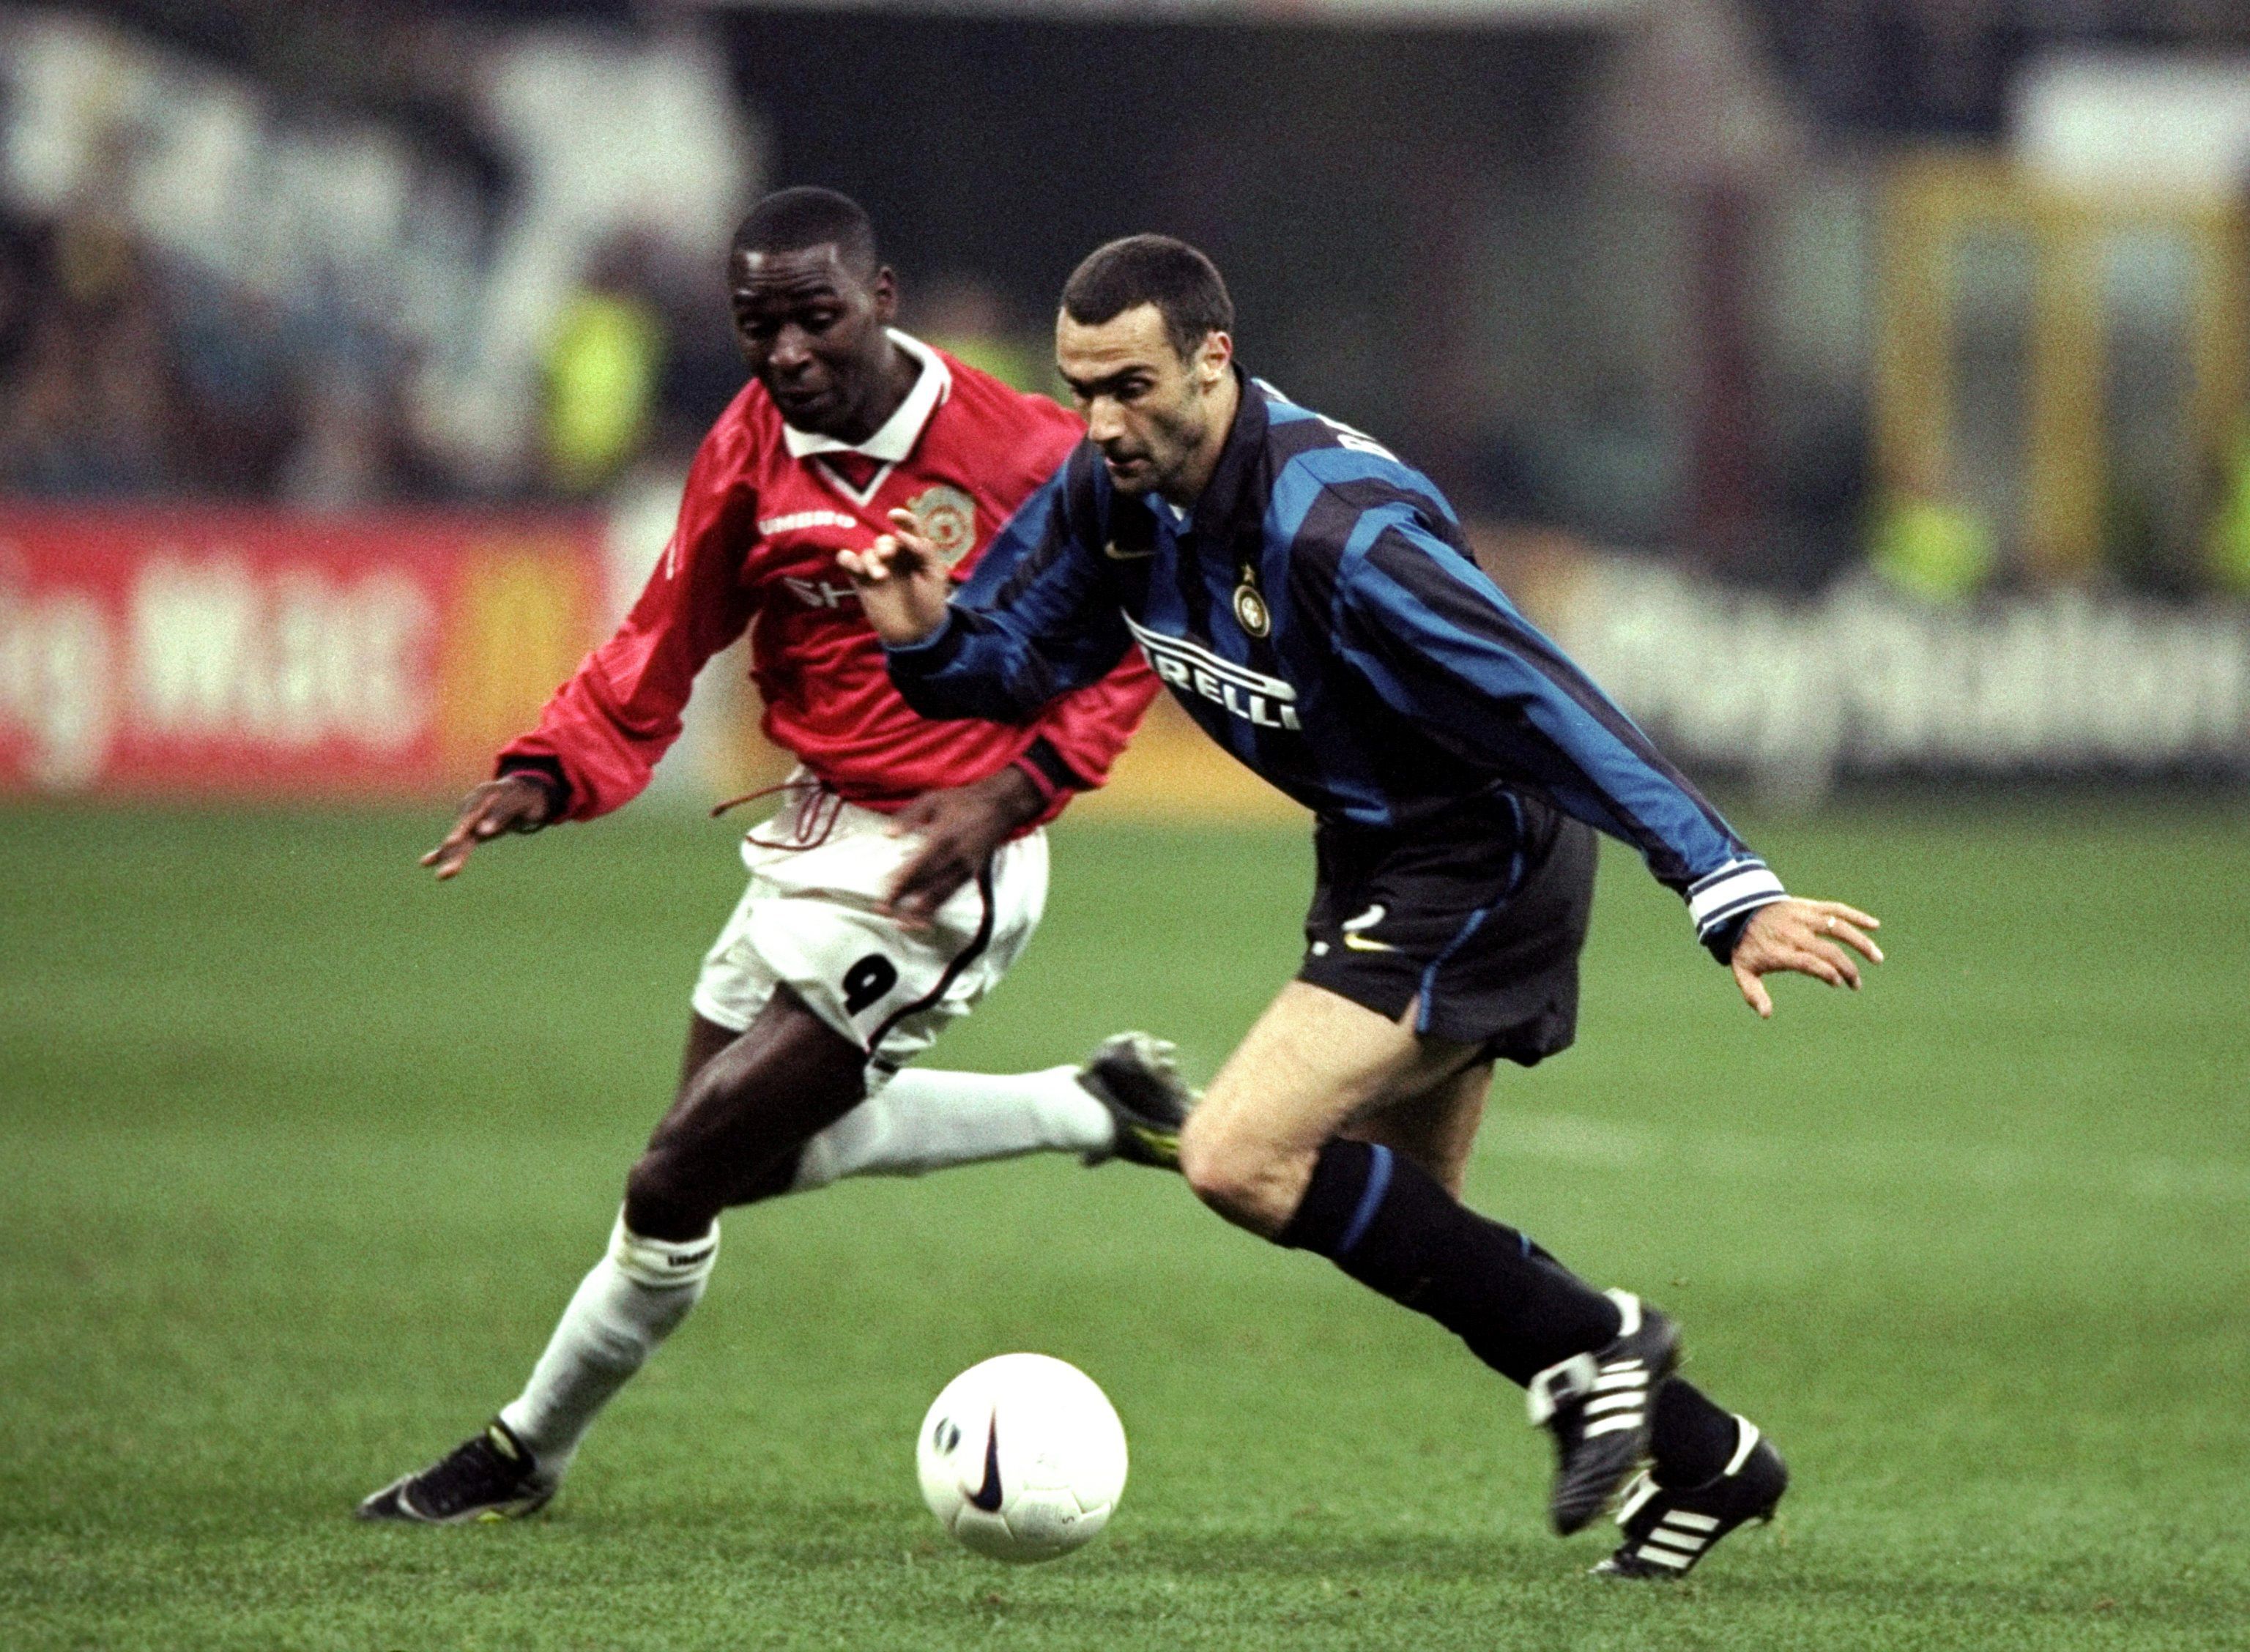 Bergomi was a one club man with Inter